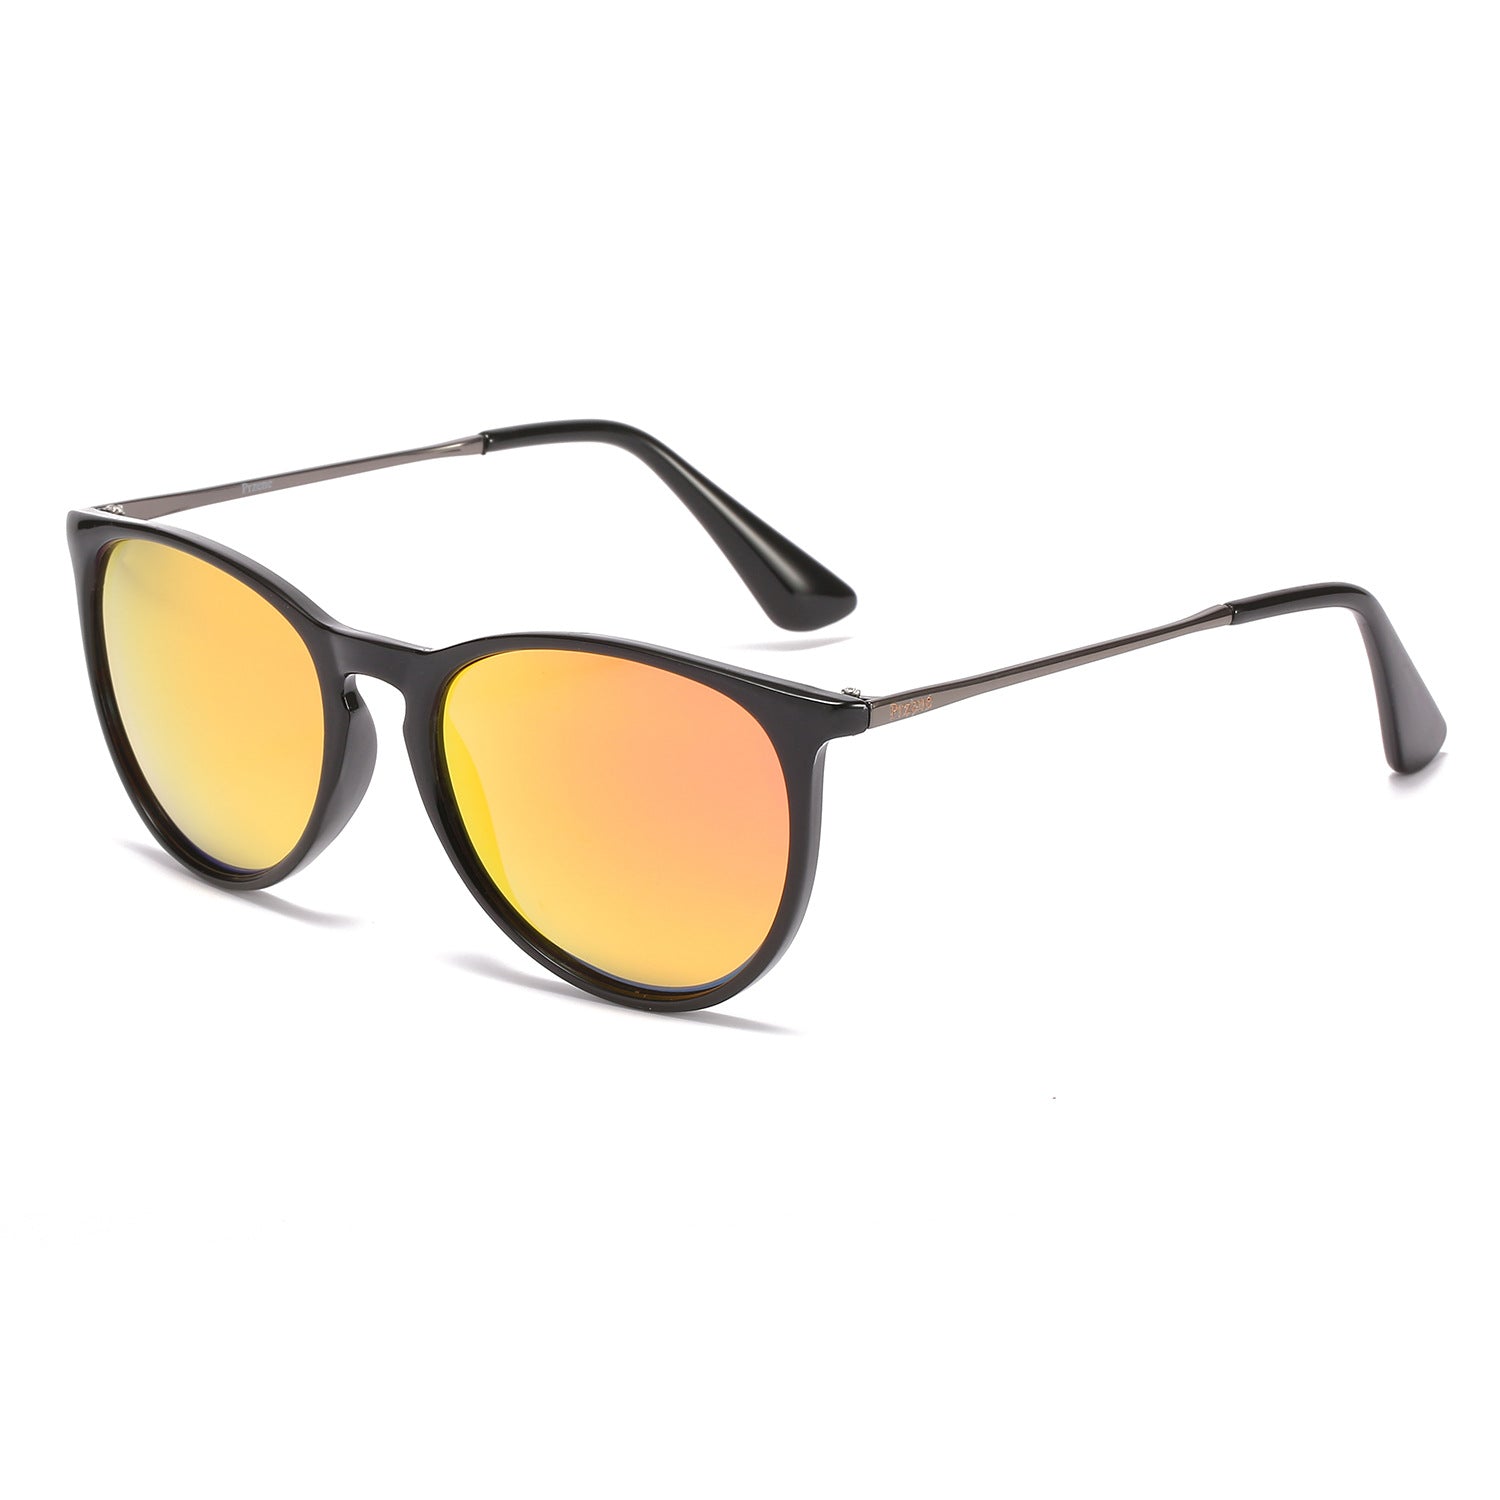 Fashion Metal Color Film Polarized Sunglasses Women apparel & accessories